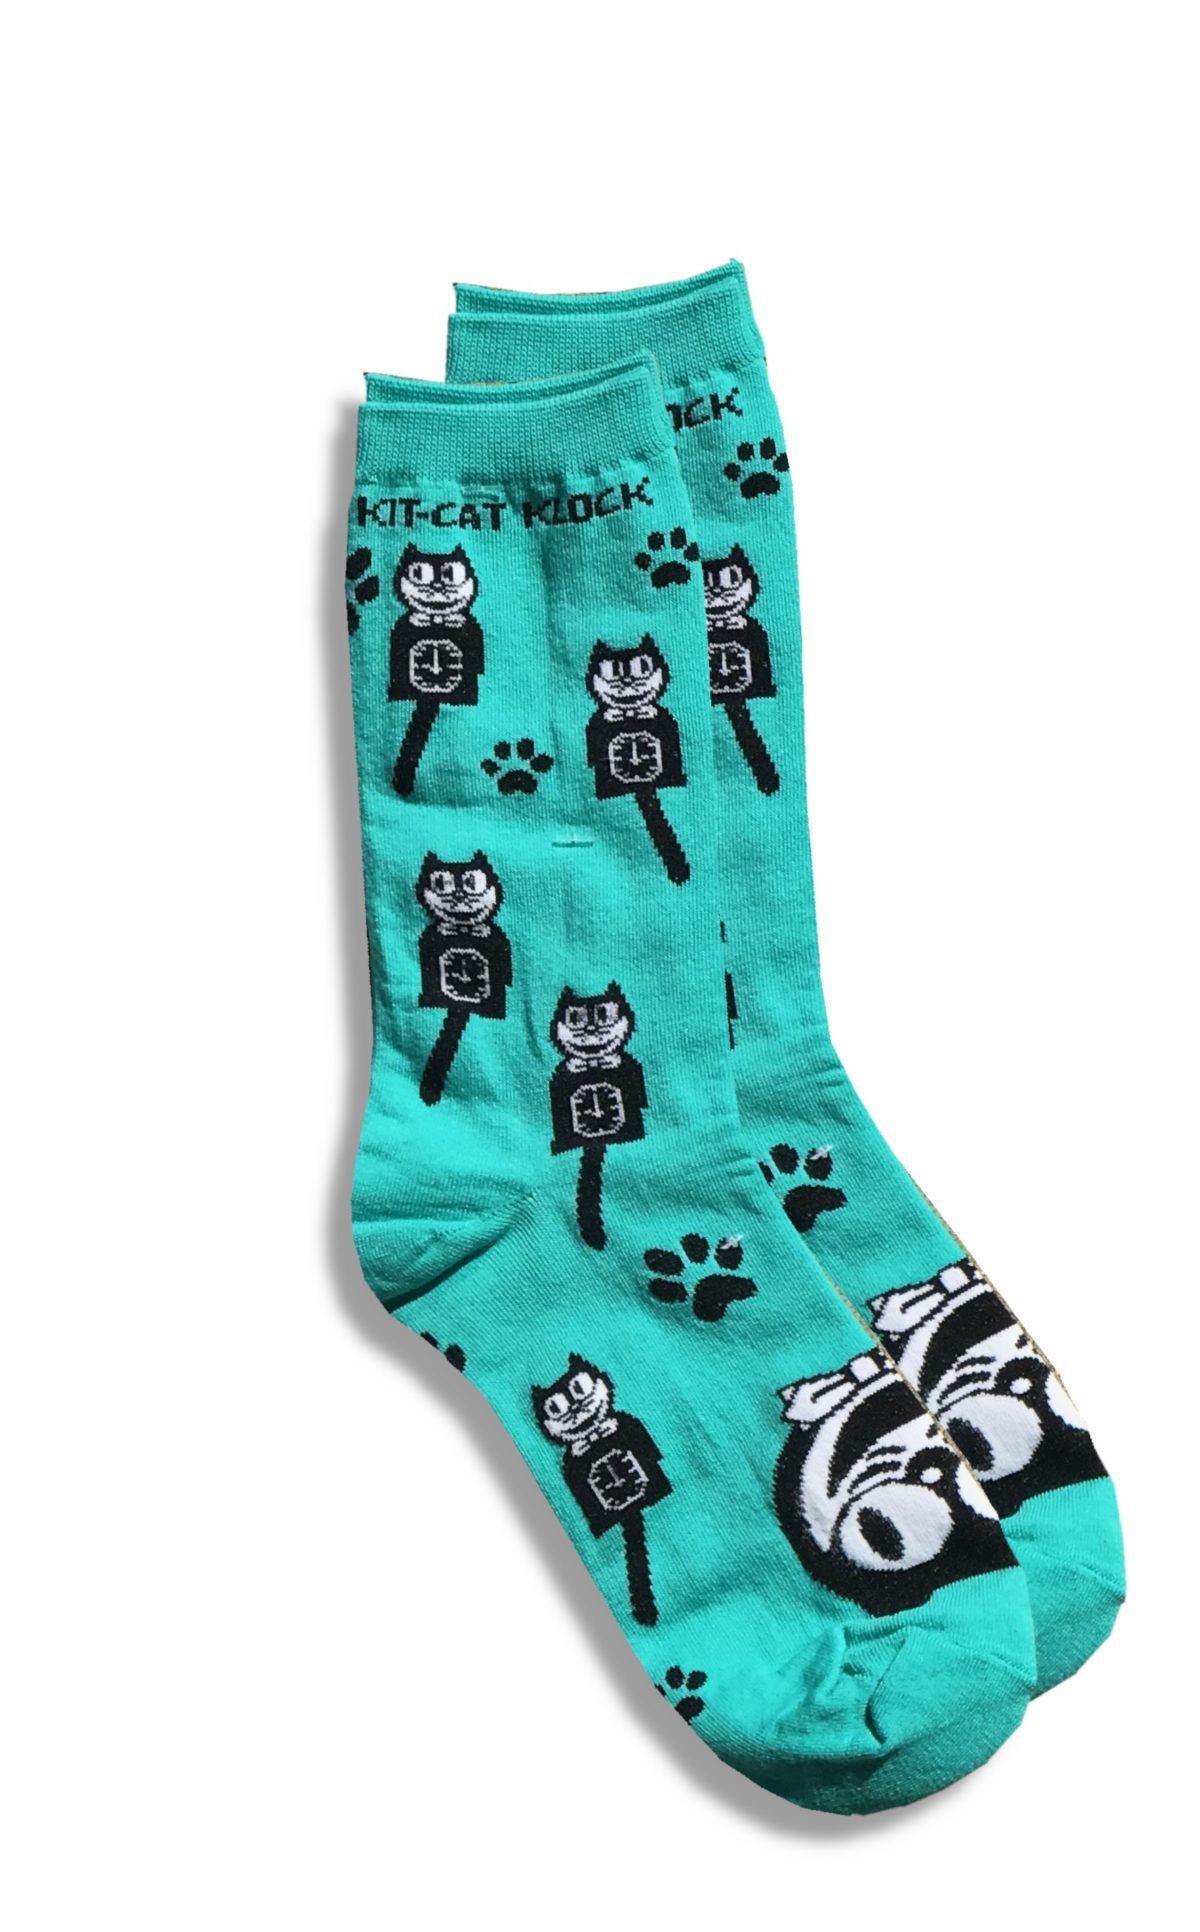 NEW! Kit-Cat Socks